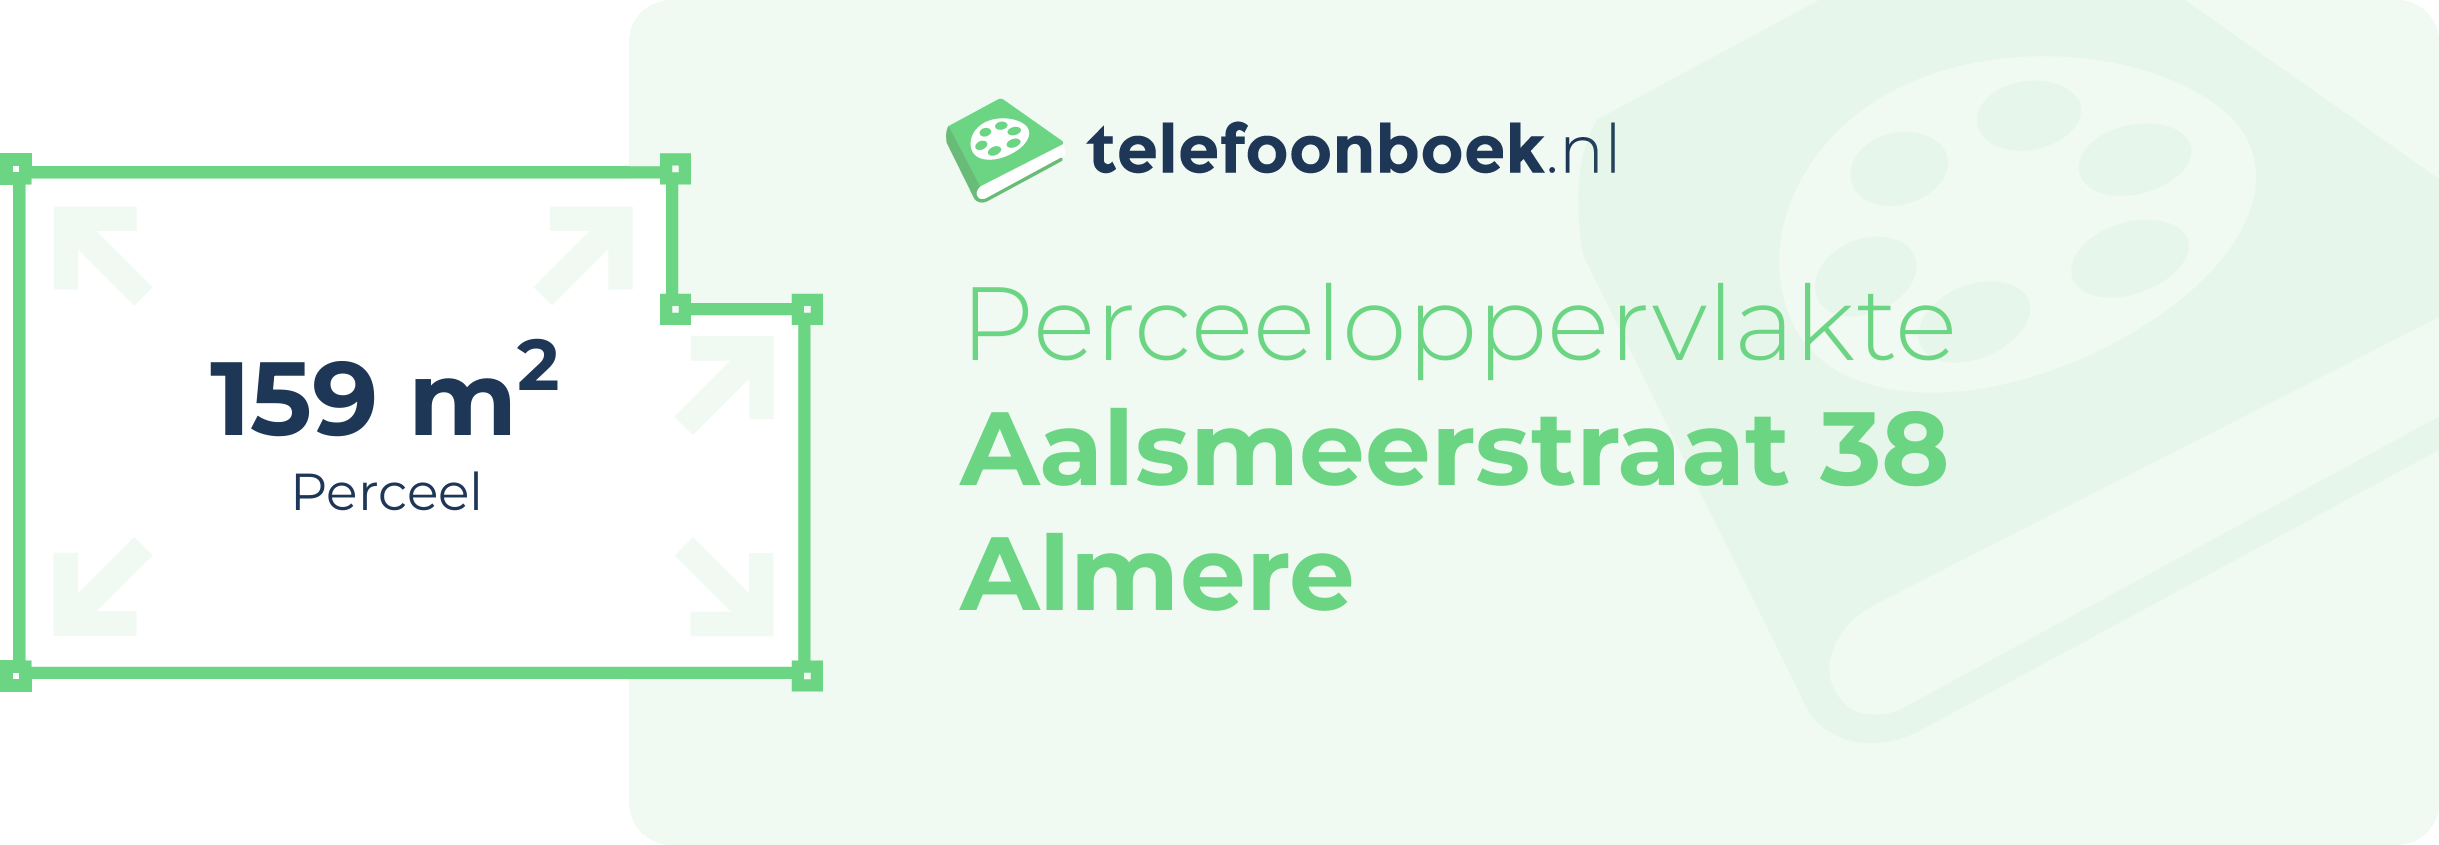 Perceeloppervlakte Aalsmeerstraat 38 Almere